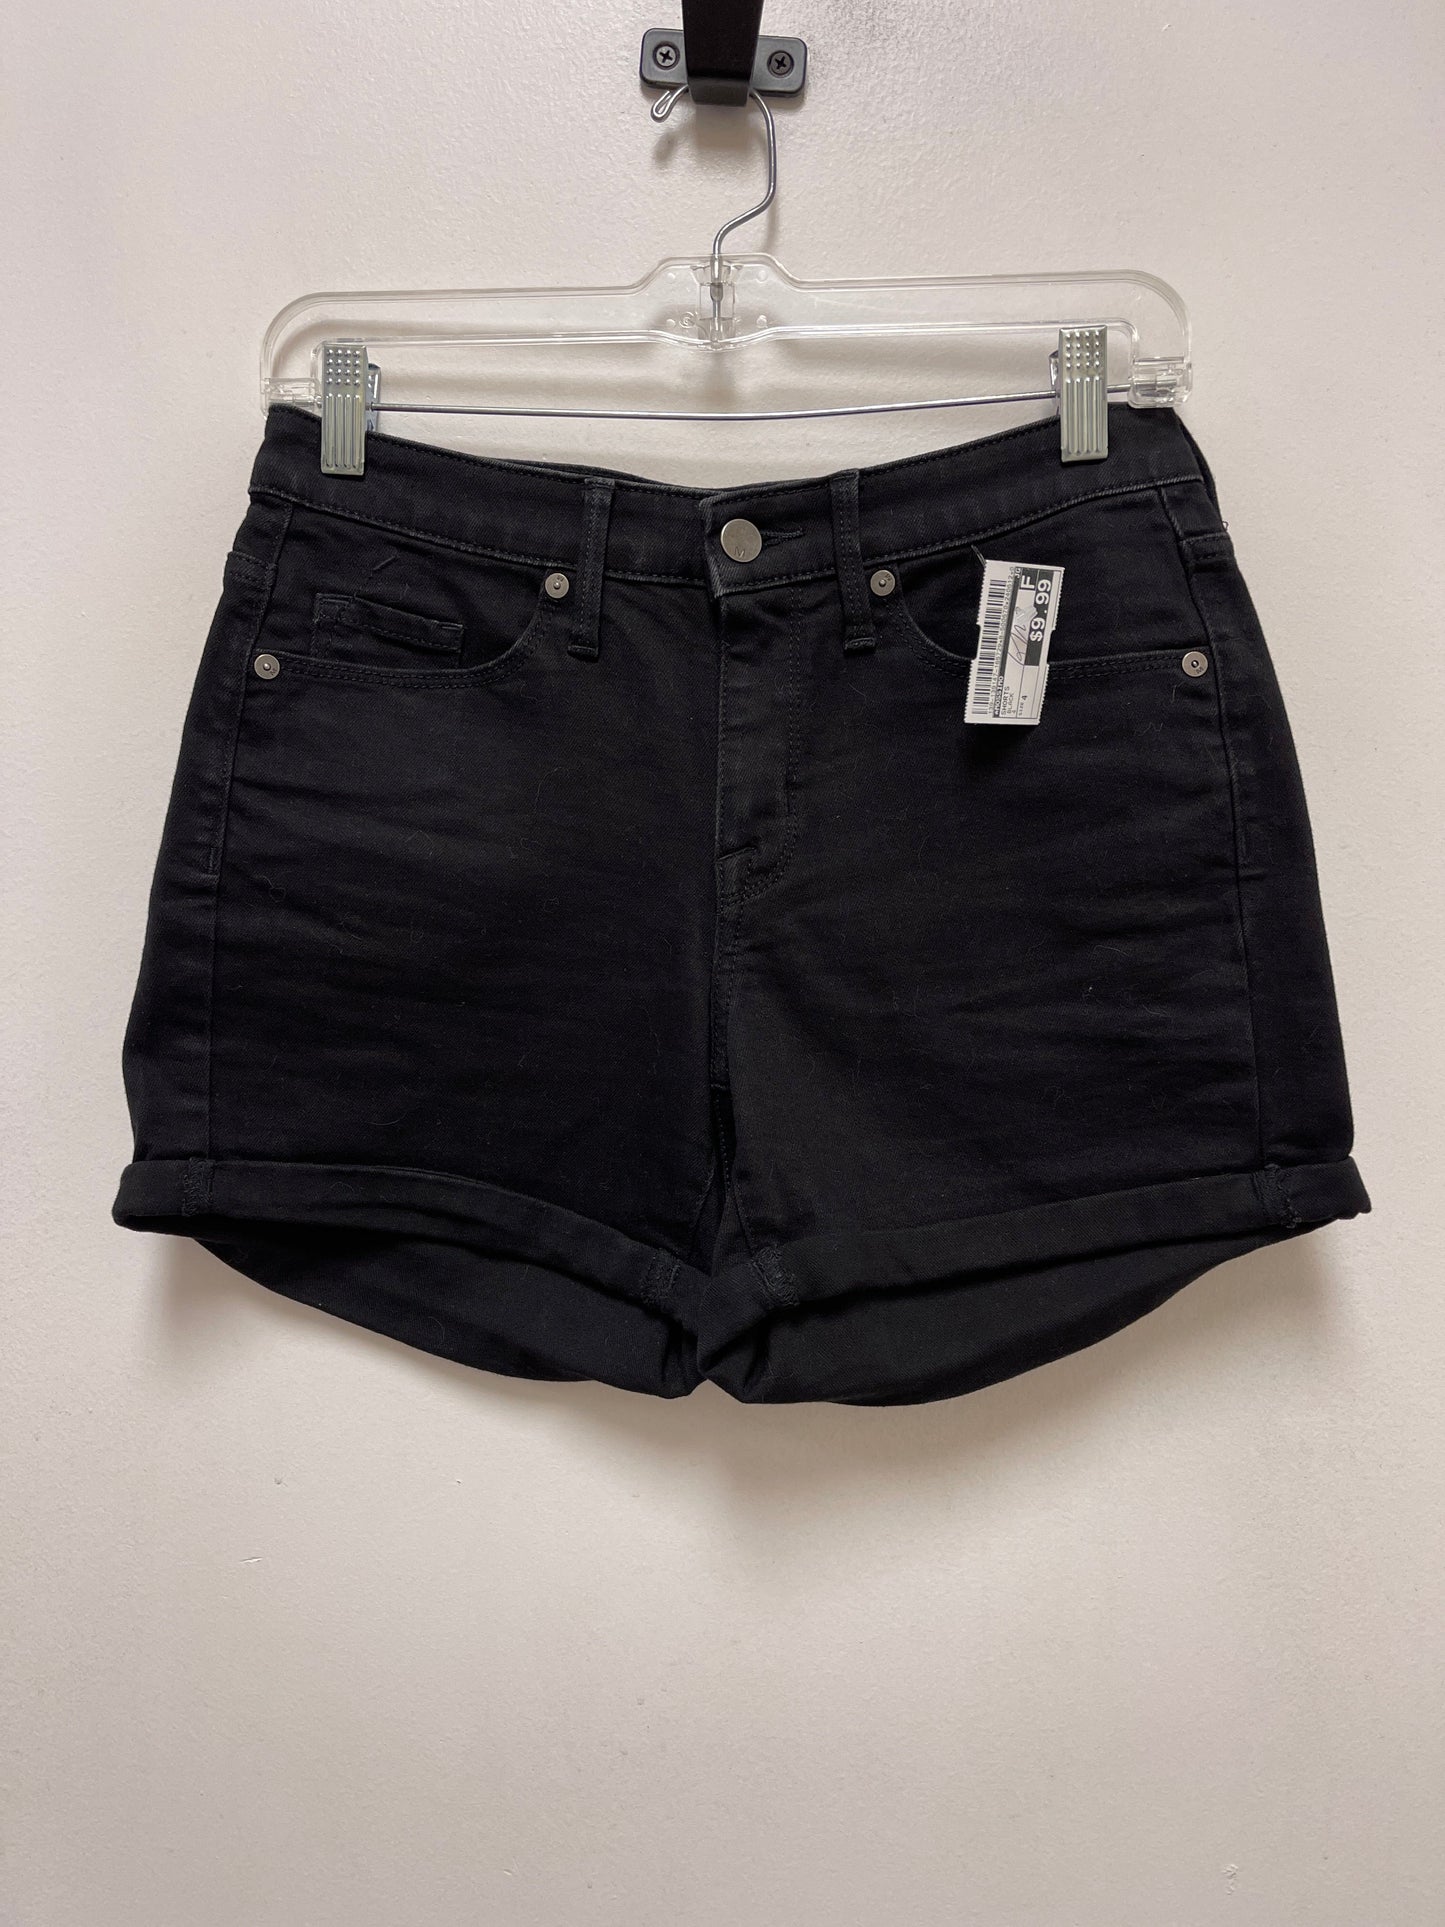 Black Shorts Mossimo, Size 4